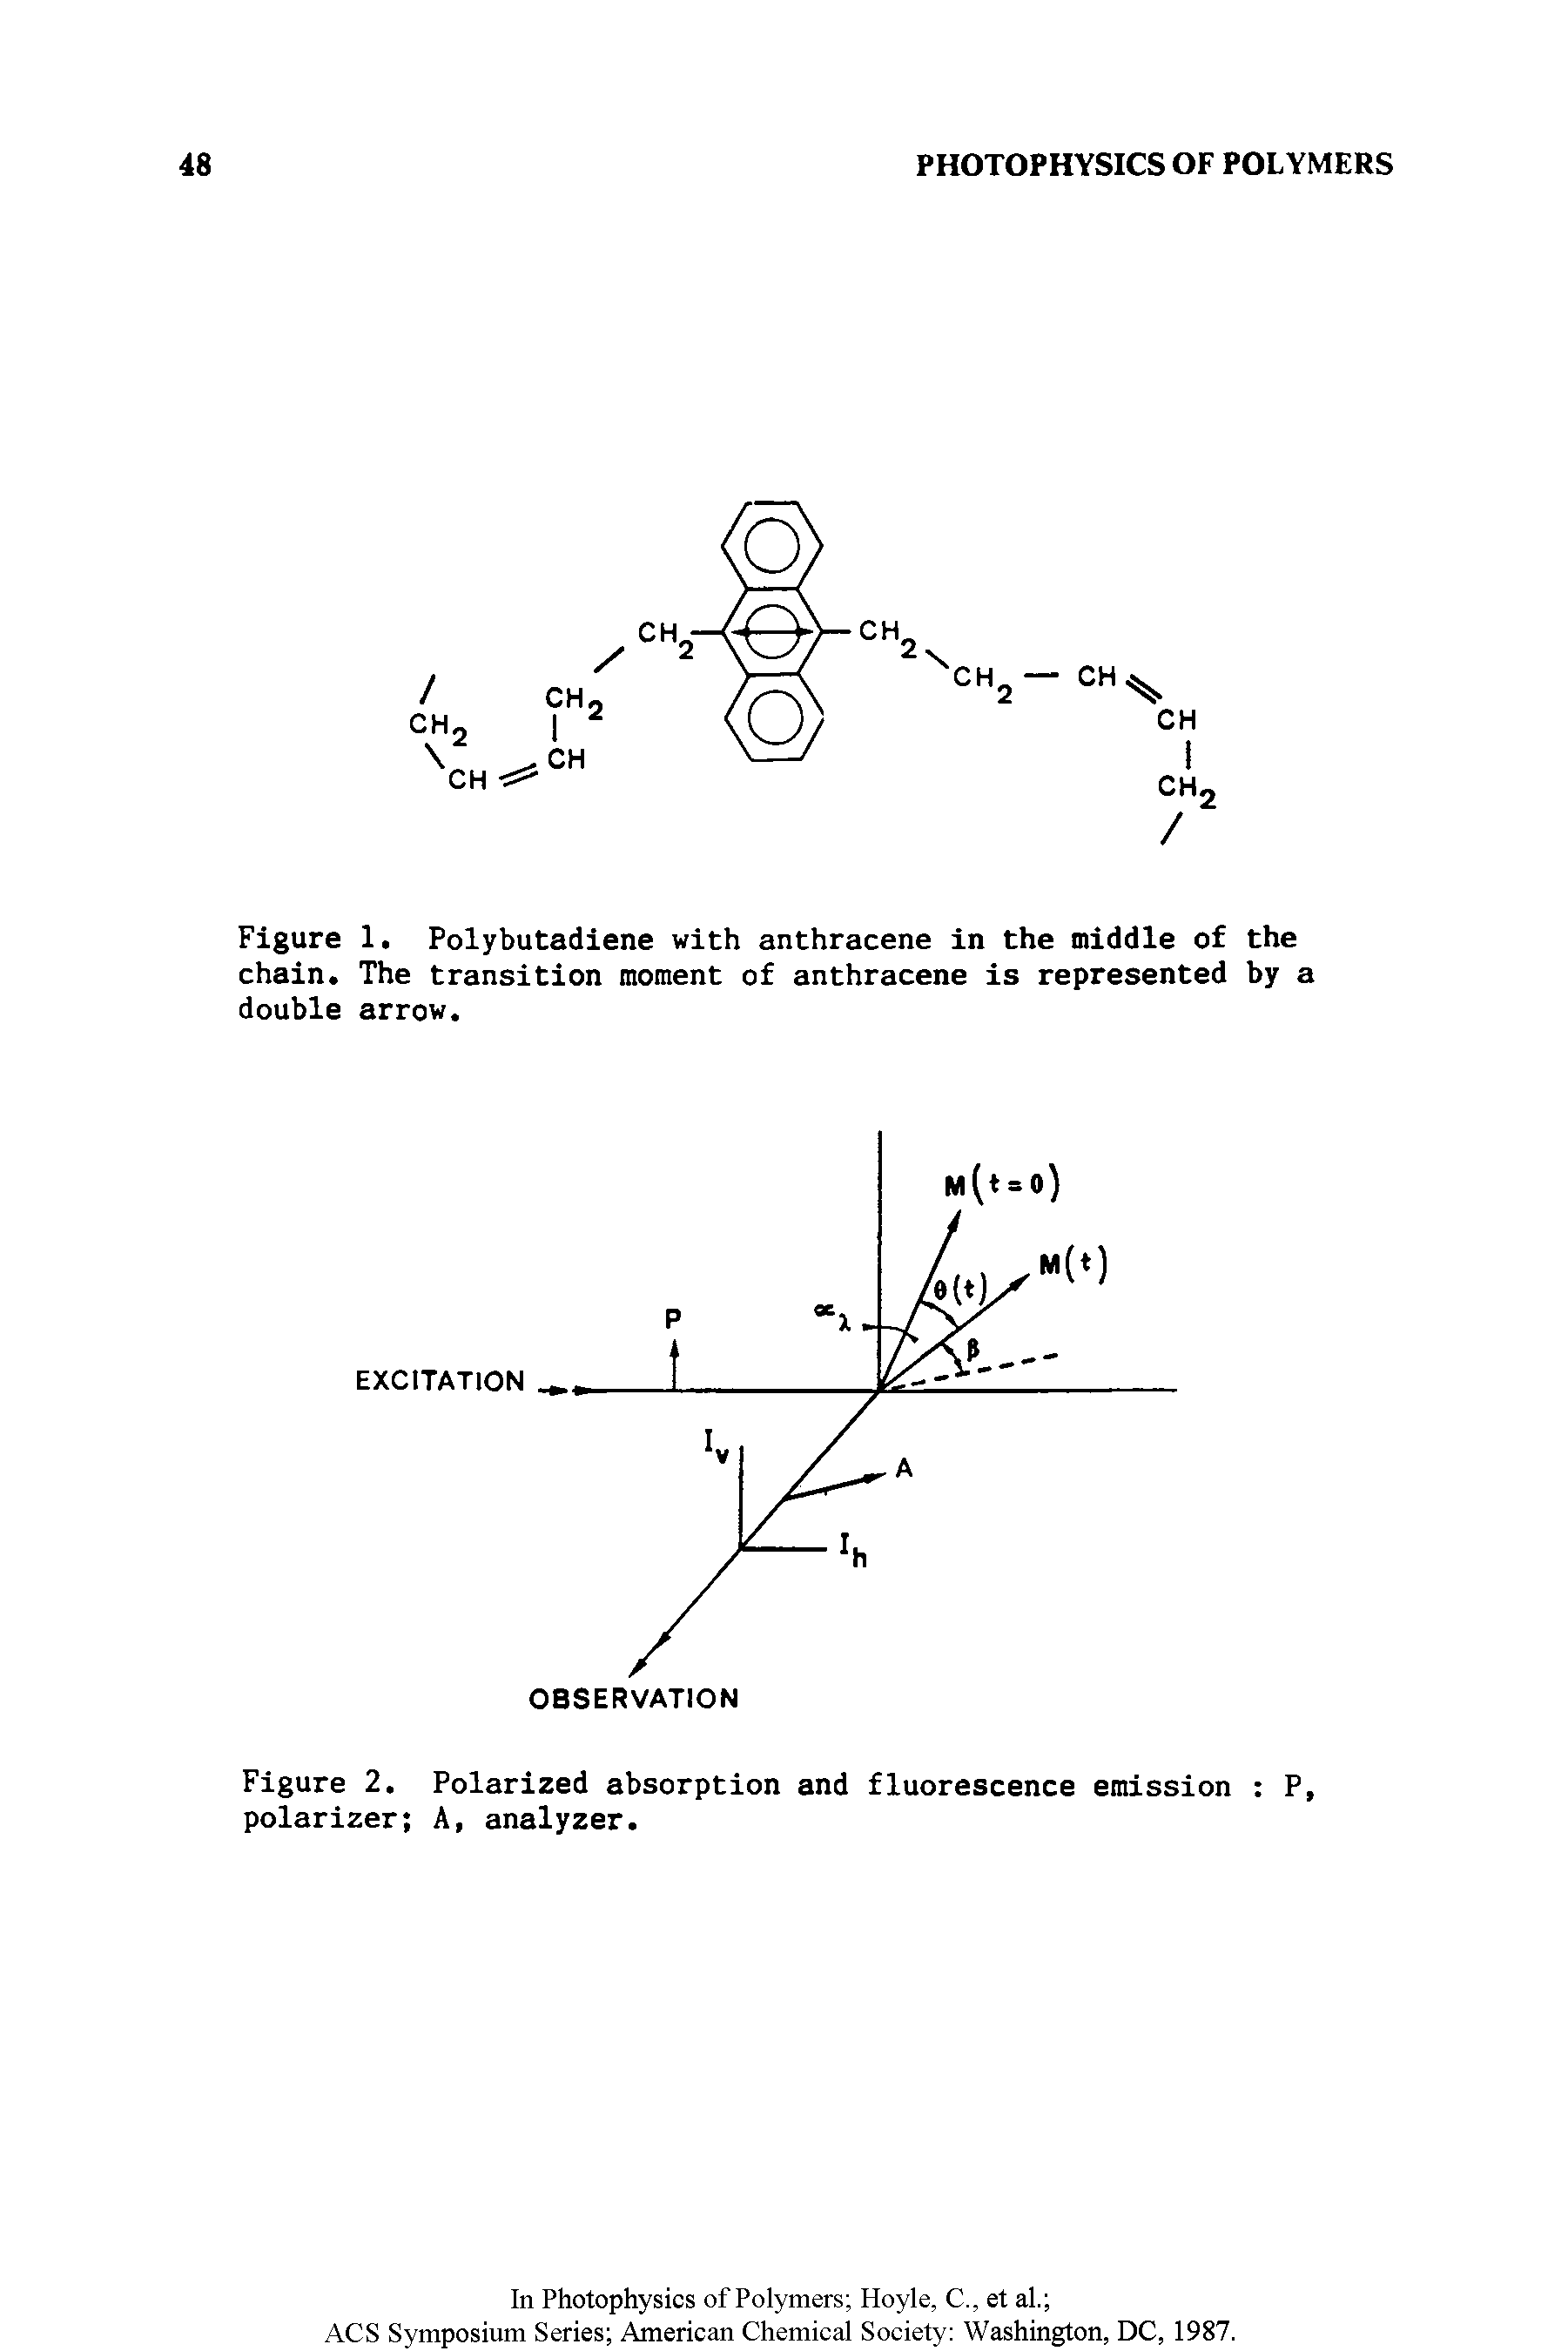 Figure 2. Polarized absorption and fluorescence emission P, polarizer A, analyzer.